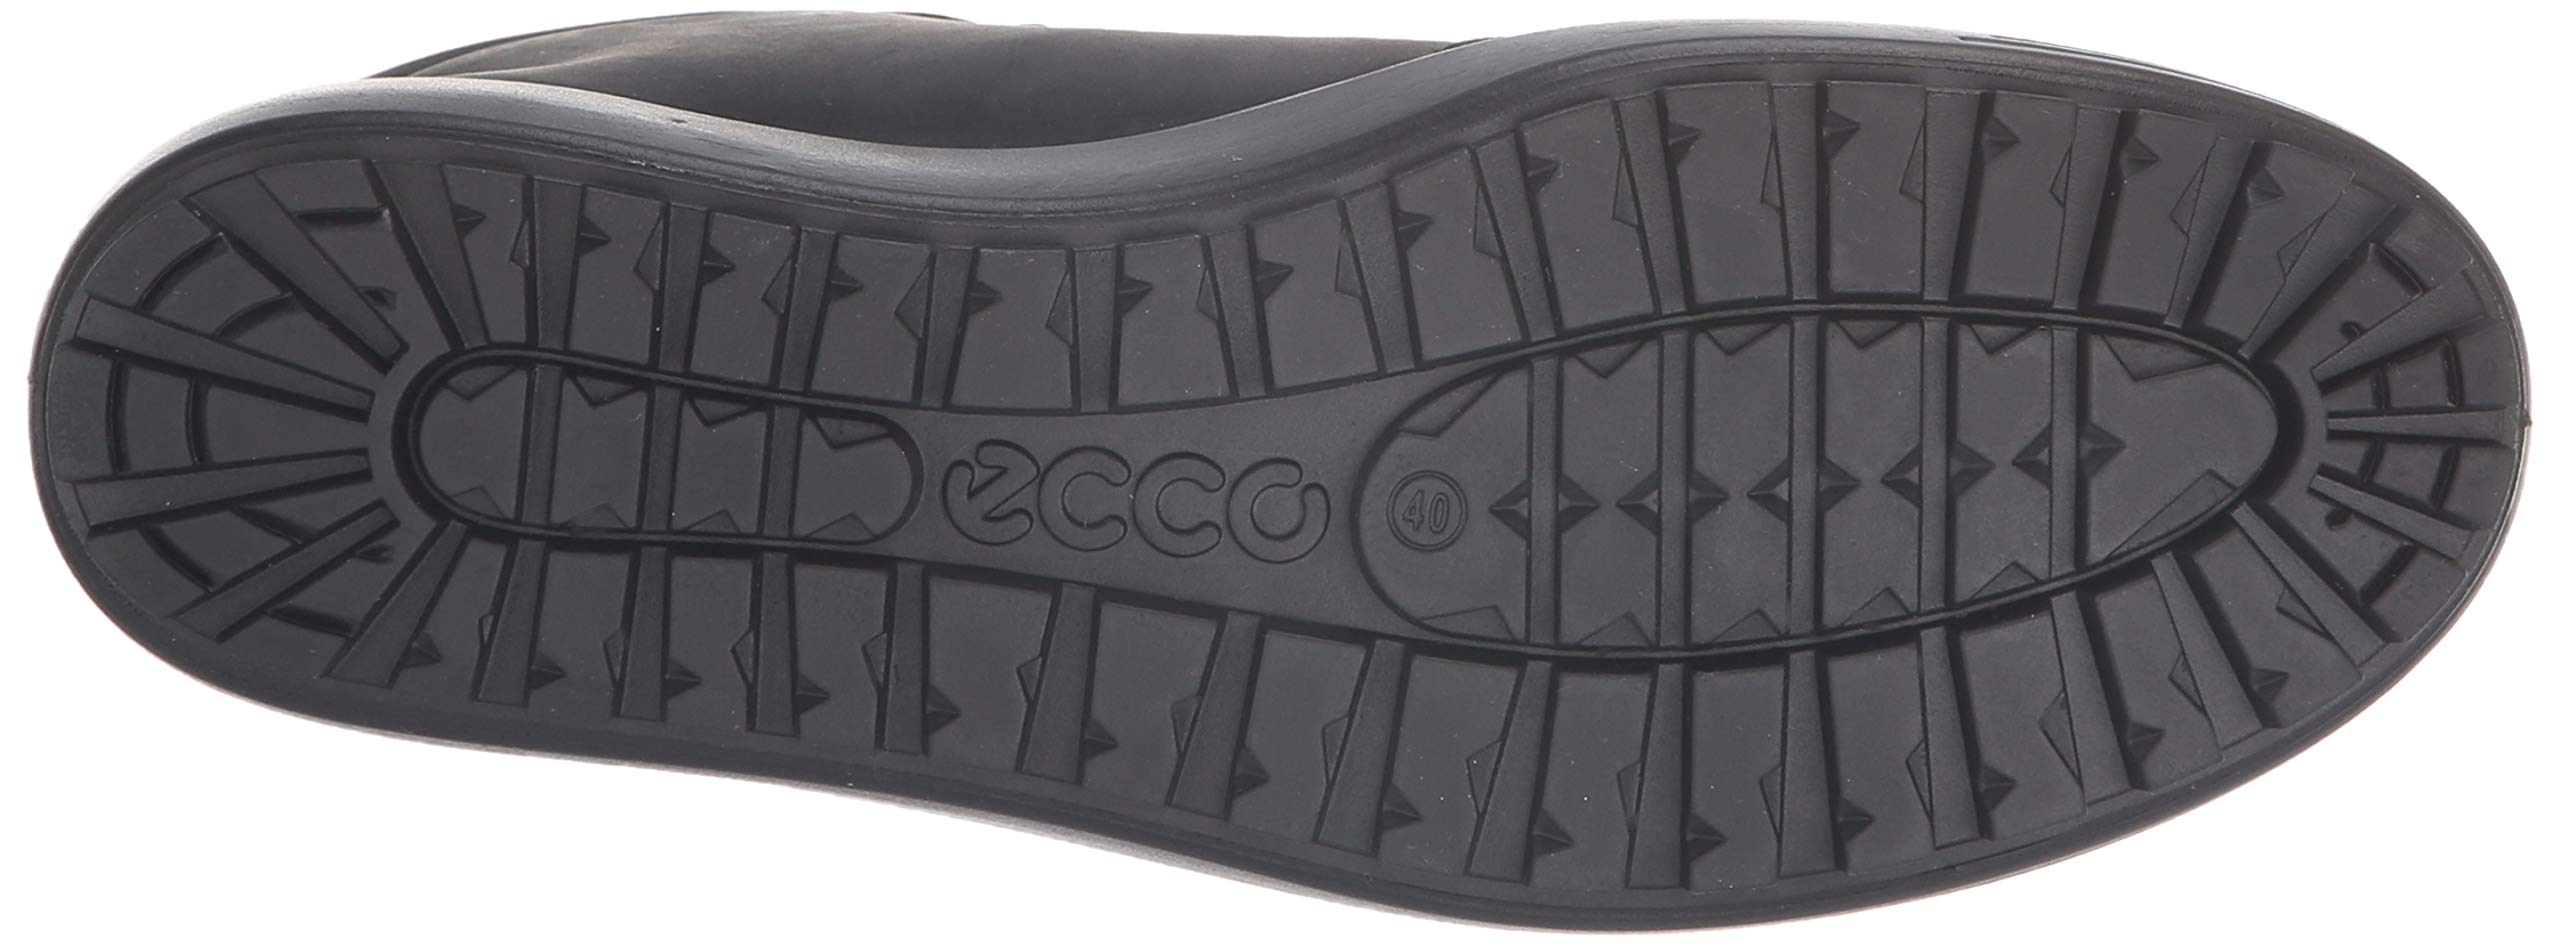 ECCO Women's Soft 7 TRED Gore-TEX High Sneaker